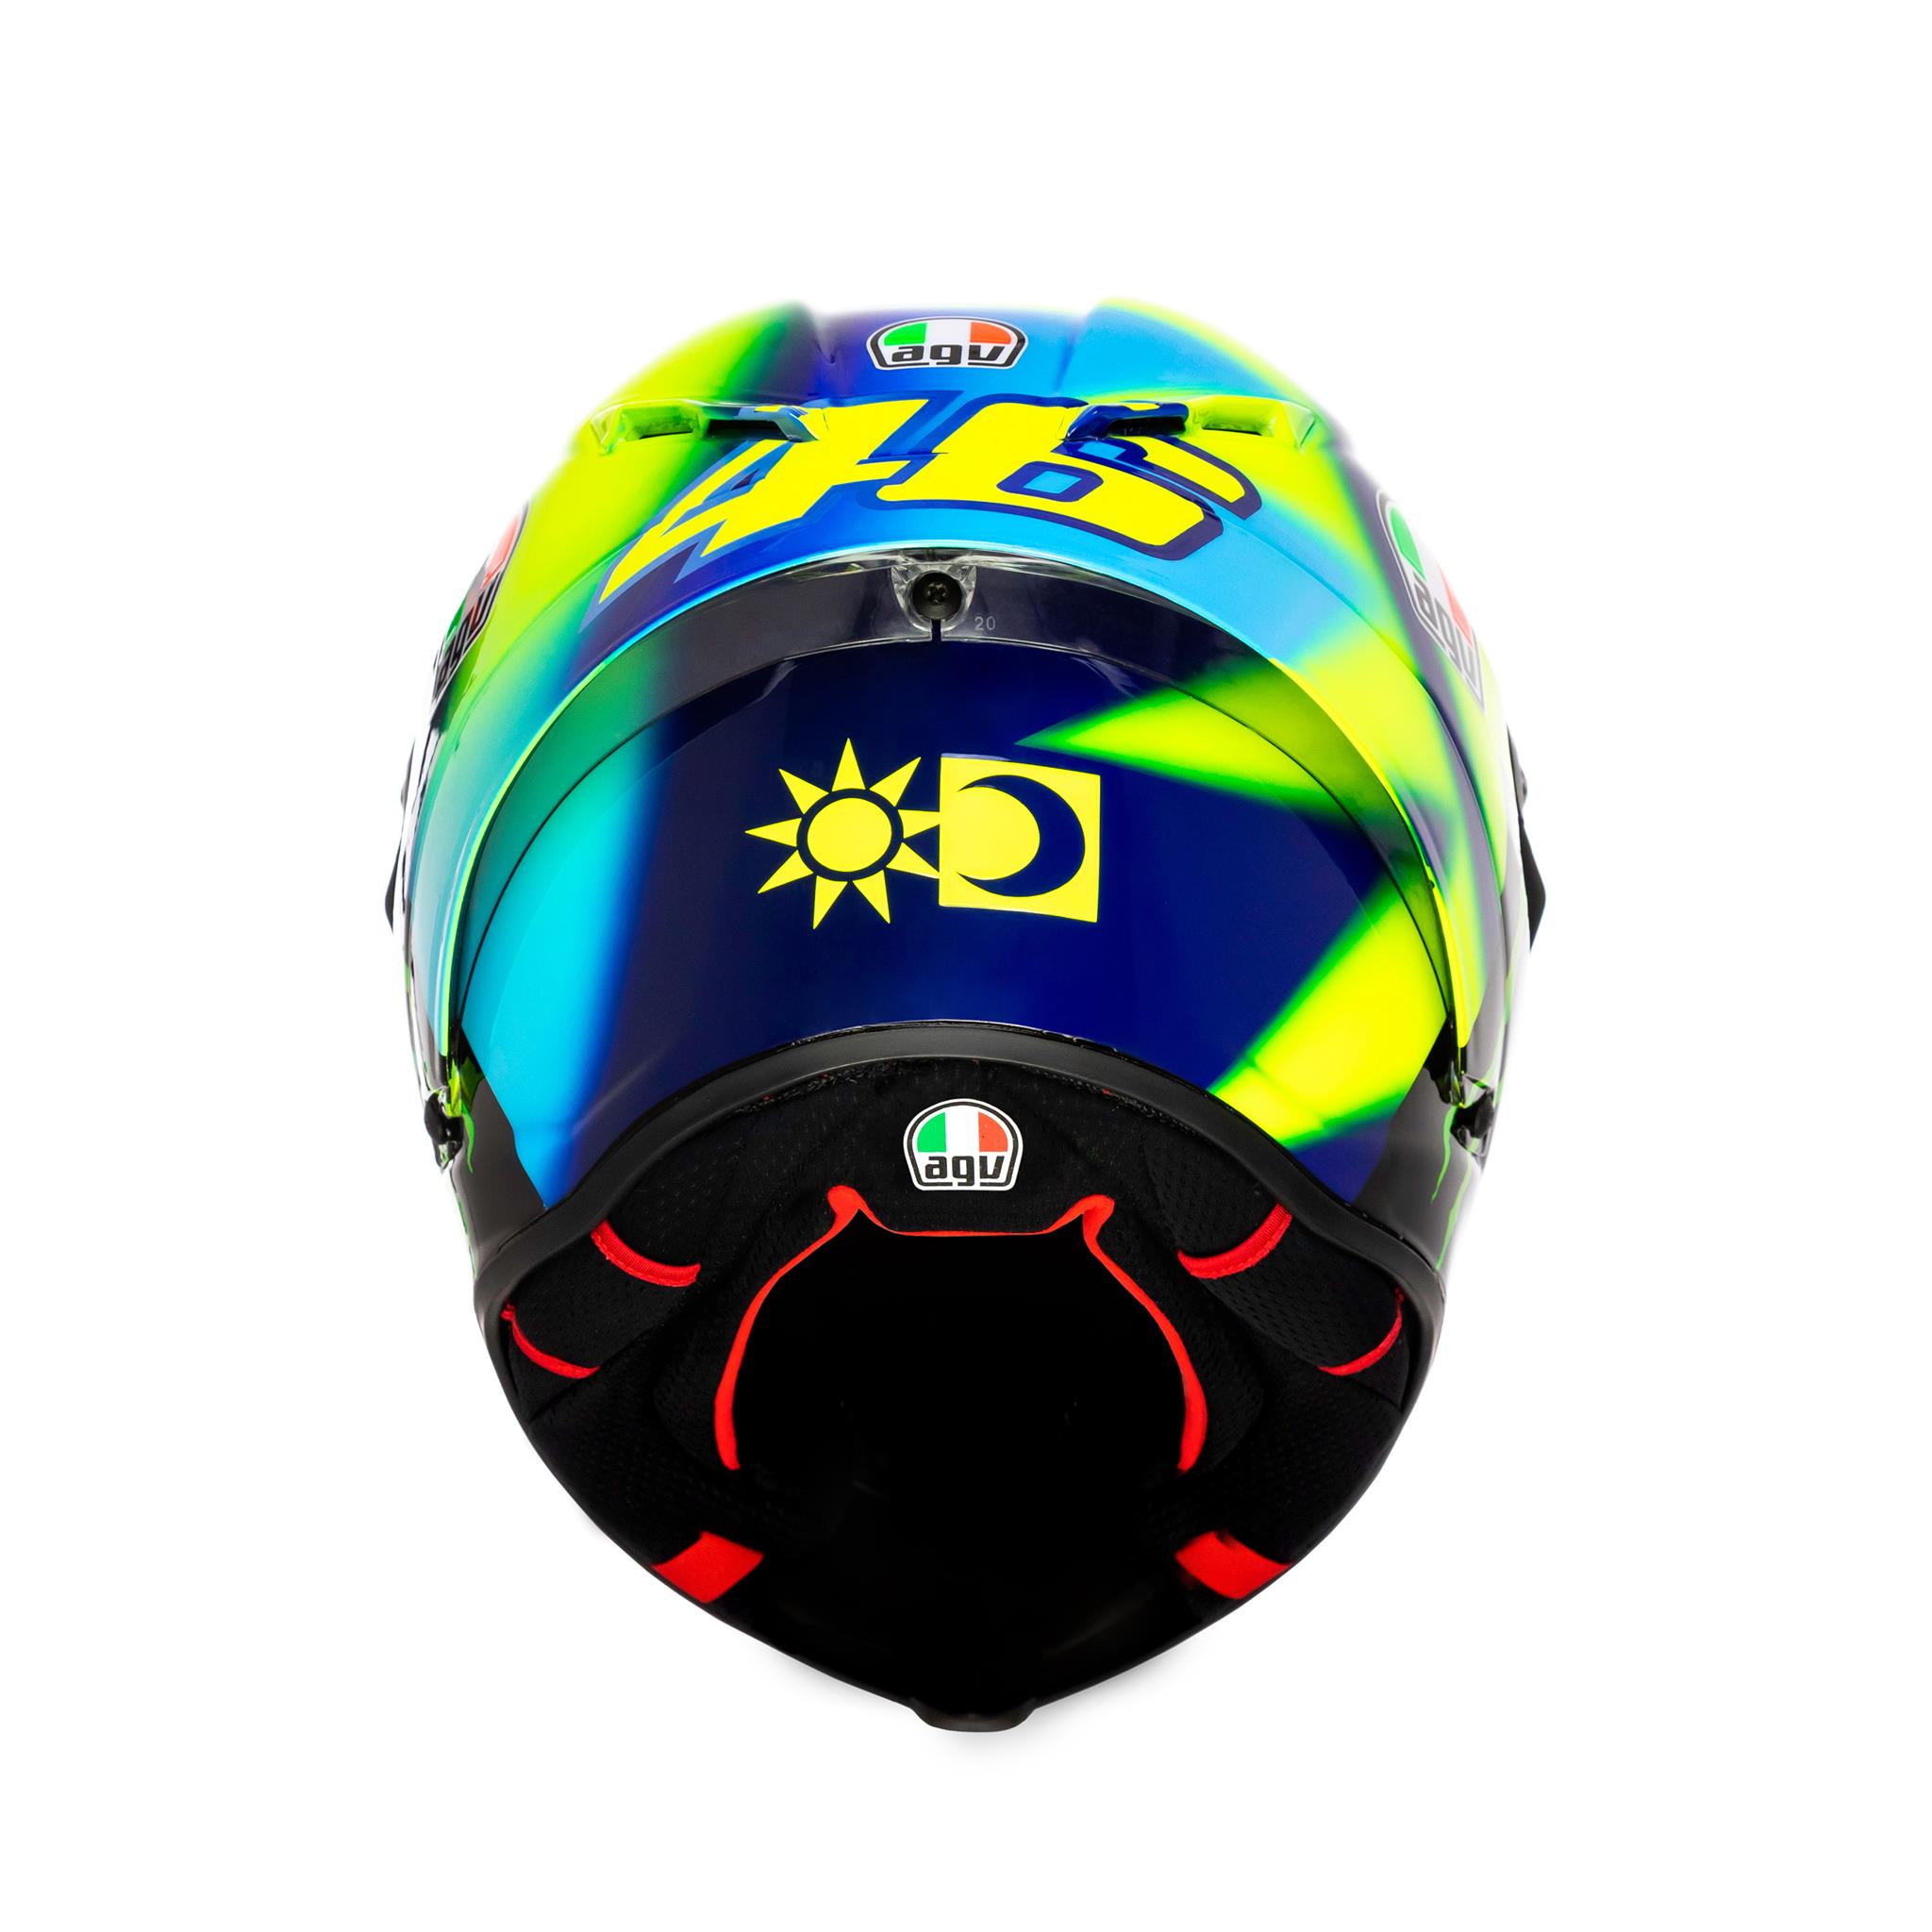 Valentino Rossi's nieuwe 2021